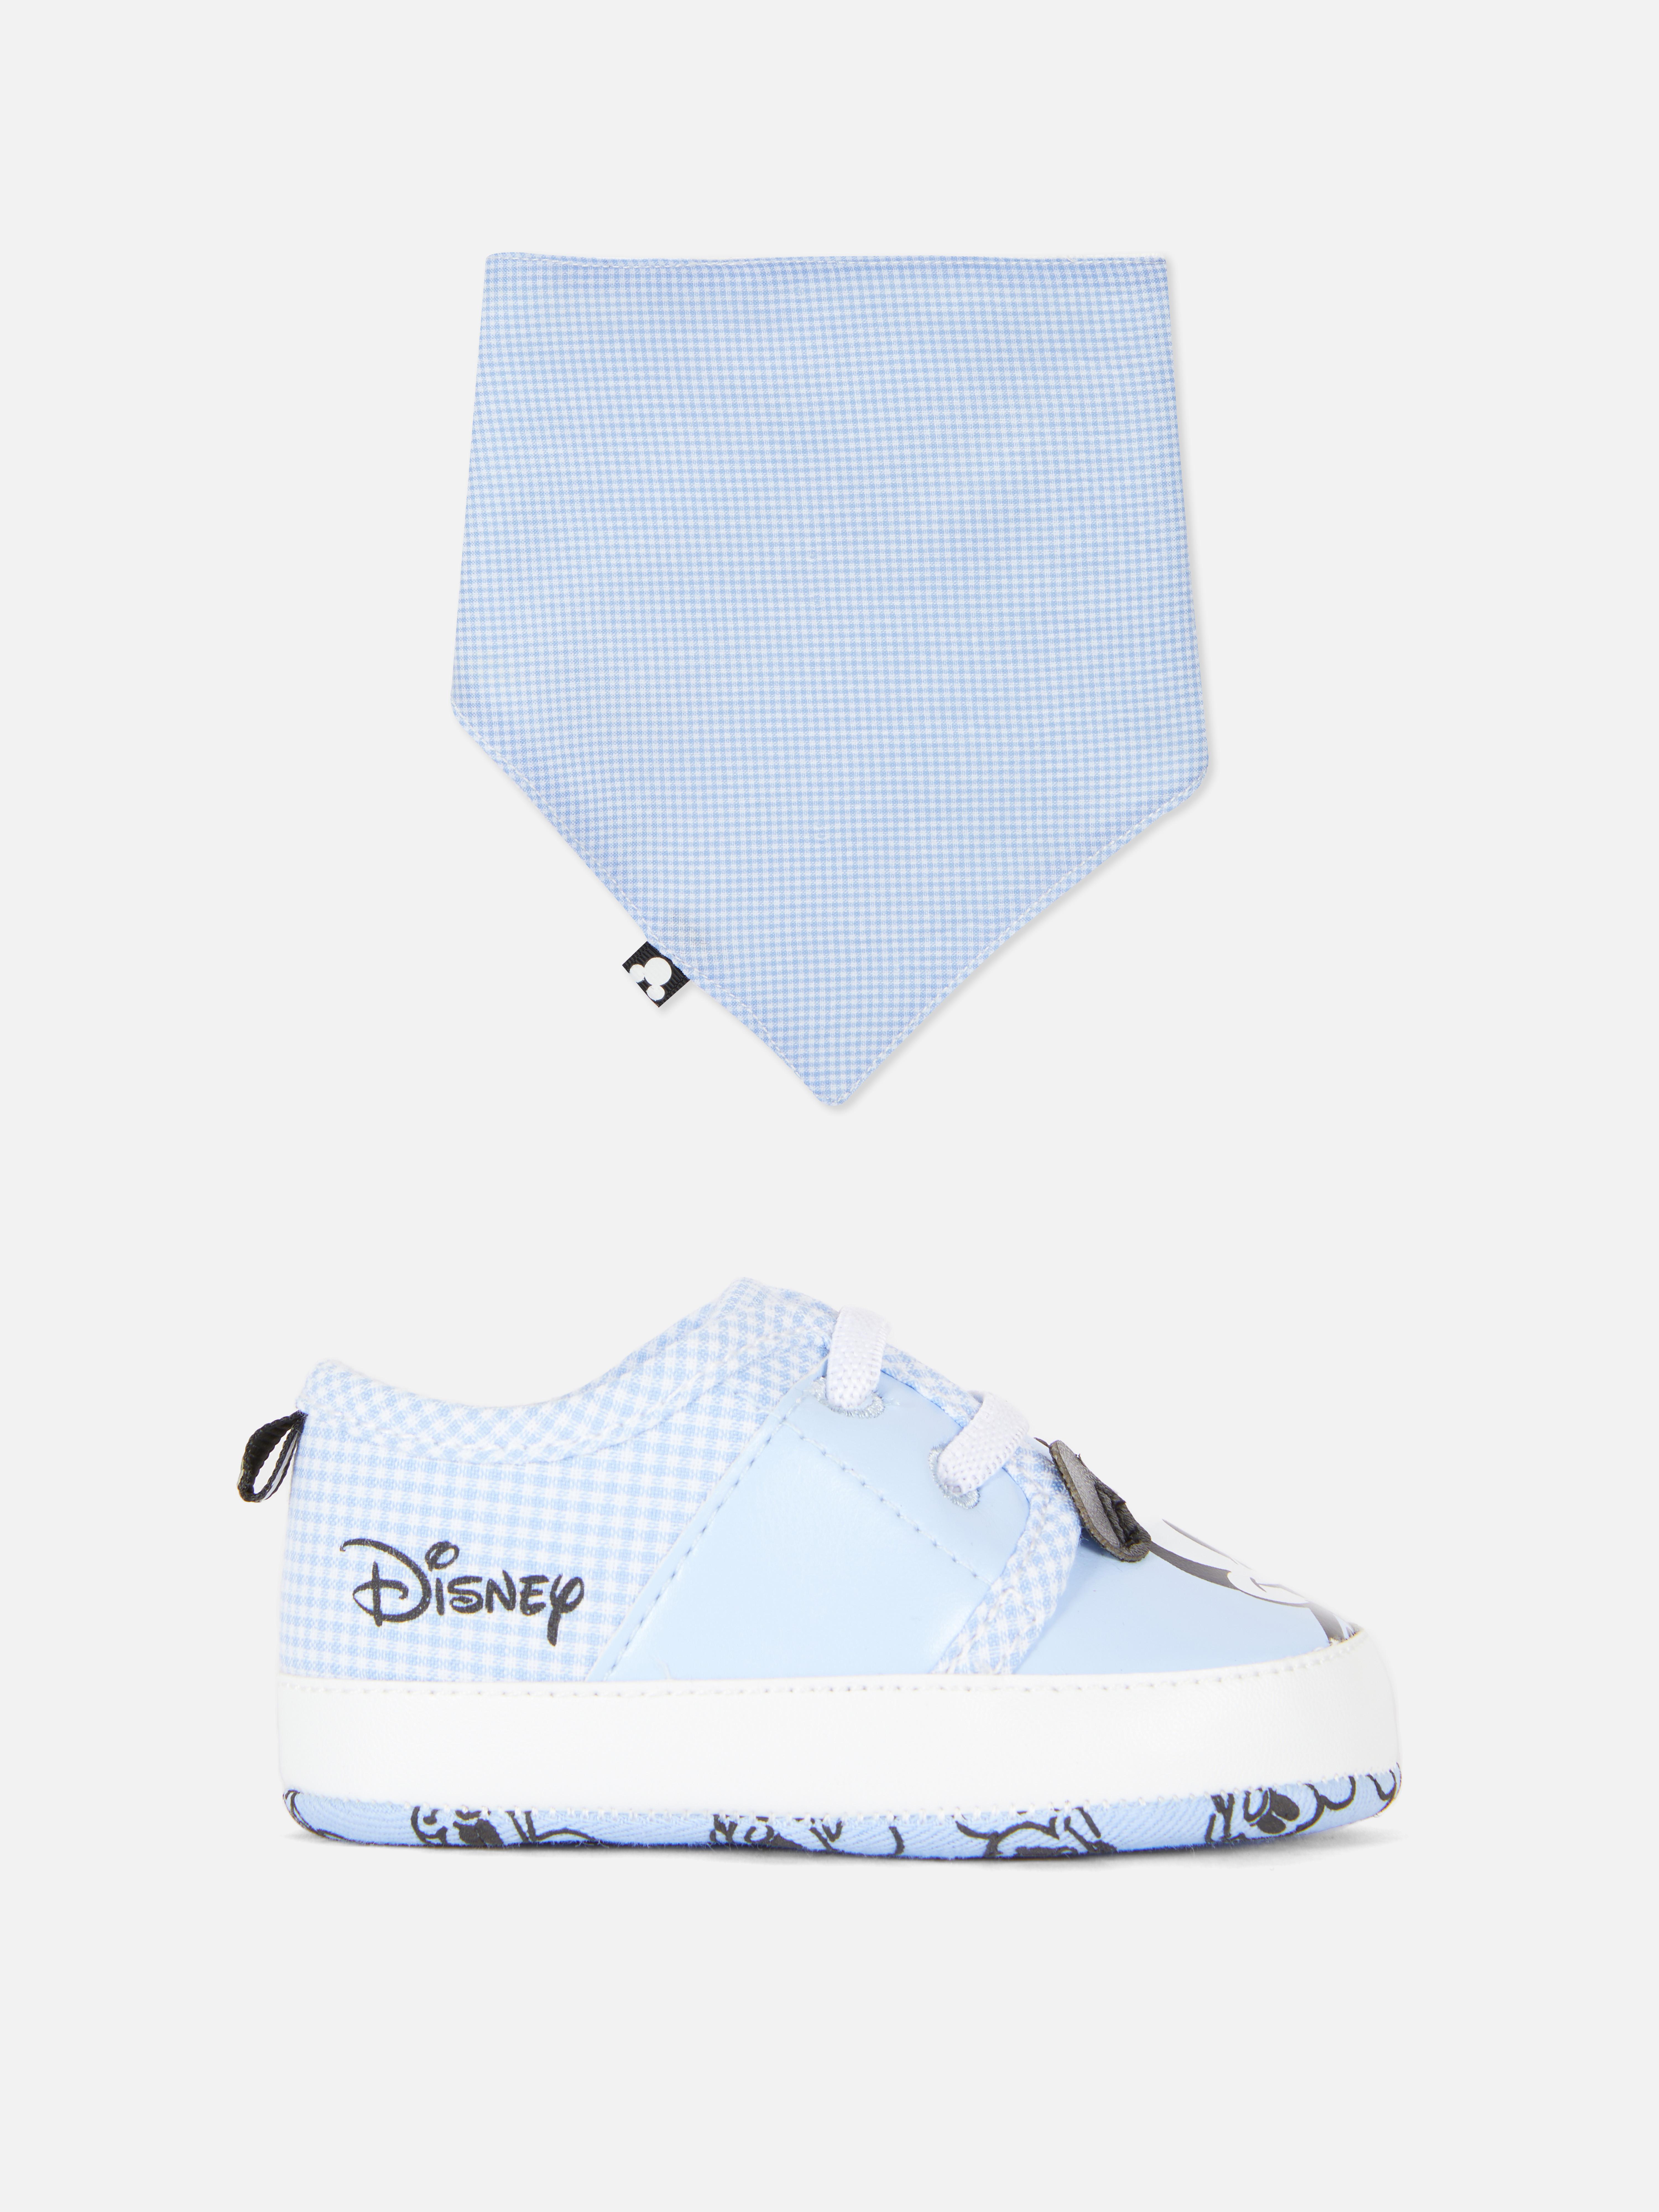 Disney’s Mickey Mouse Shoes & Bib Set